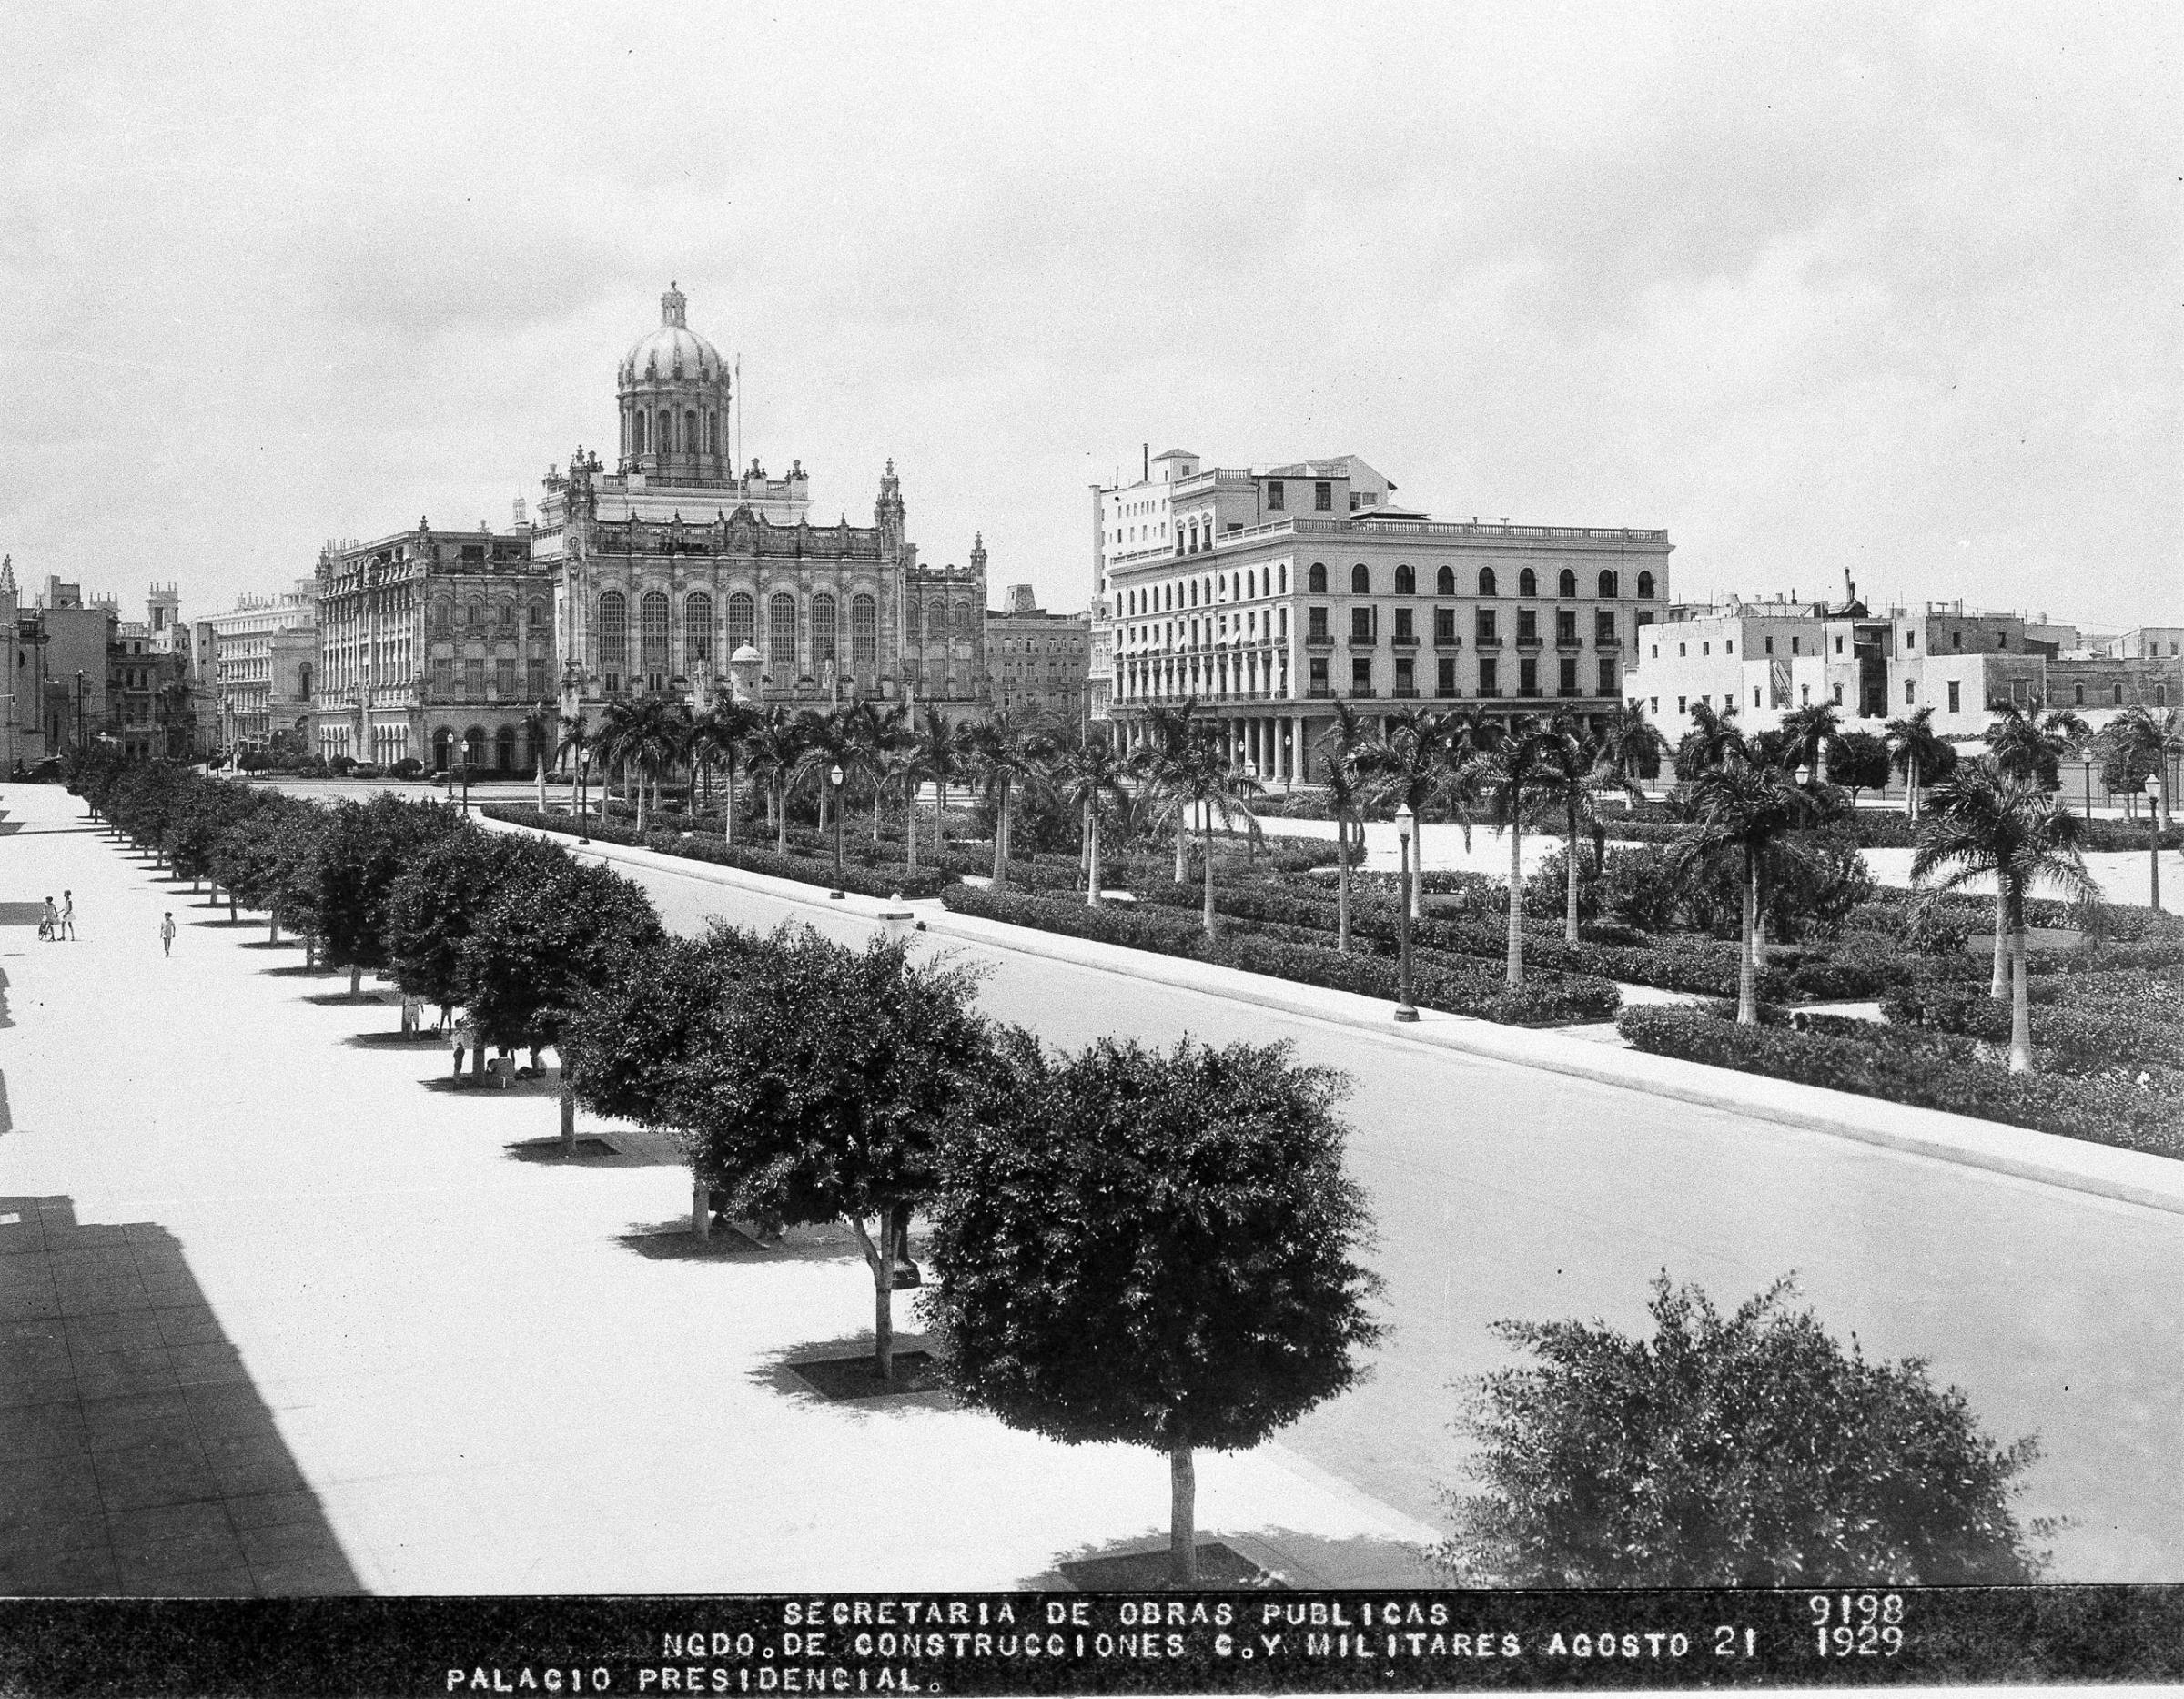 The Presidential Palace in Havana, Cuba, 1929.